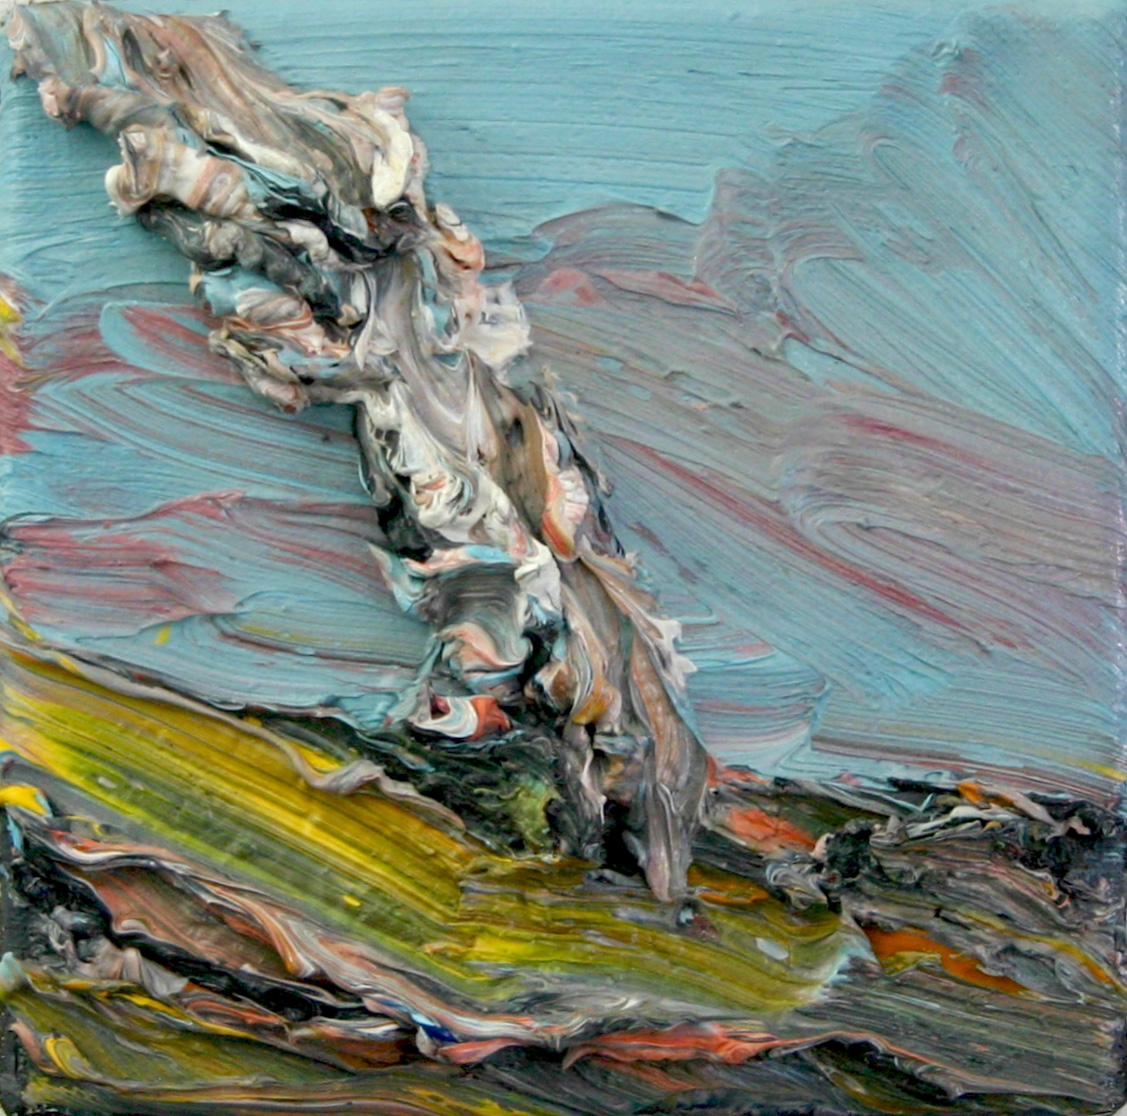 Harry Meyer, RAUCH, 2008, Öl auf Leinwand, 18 cm x 18 cm, Preis auf Anfrage, mey012kü